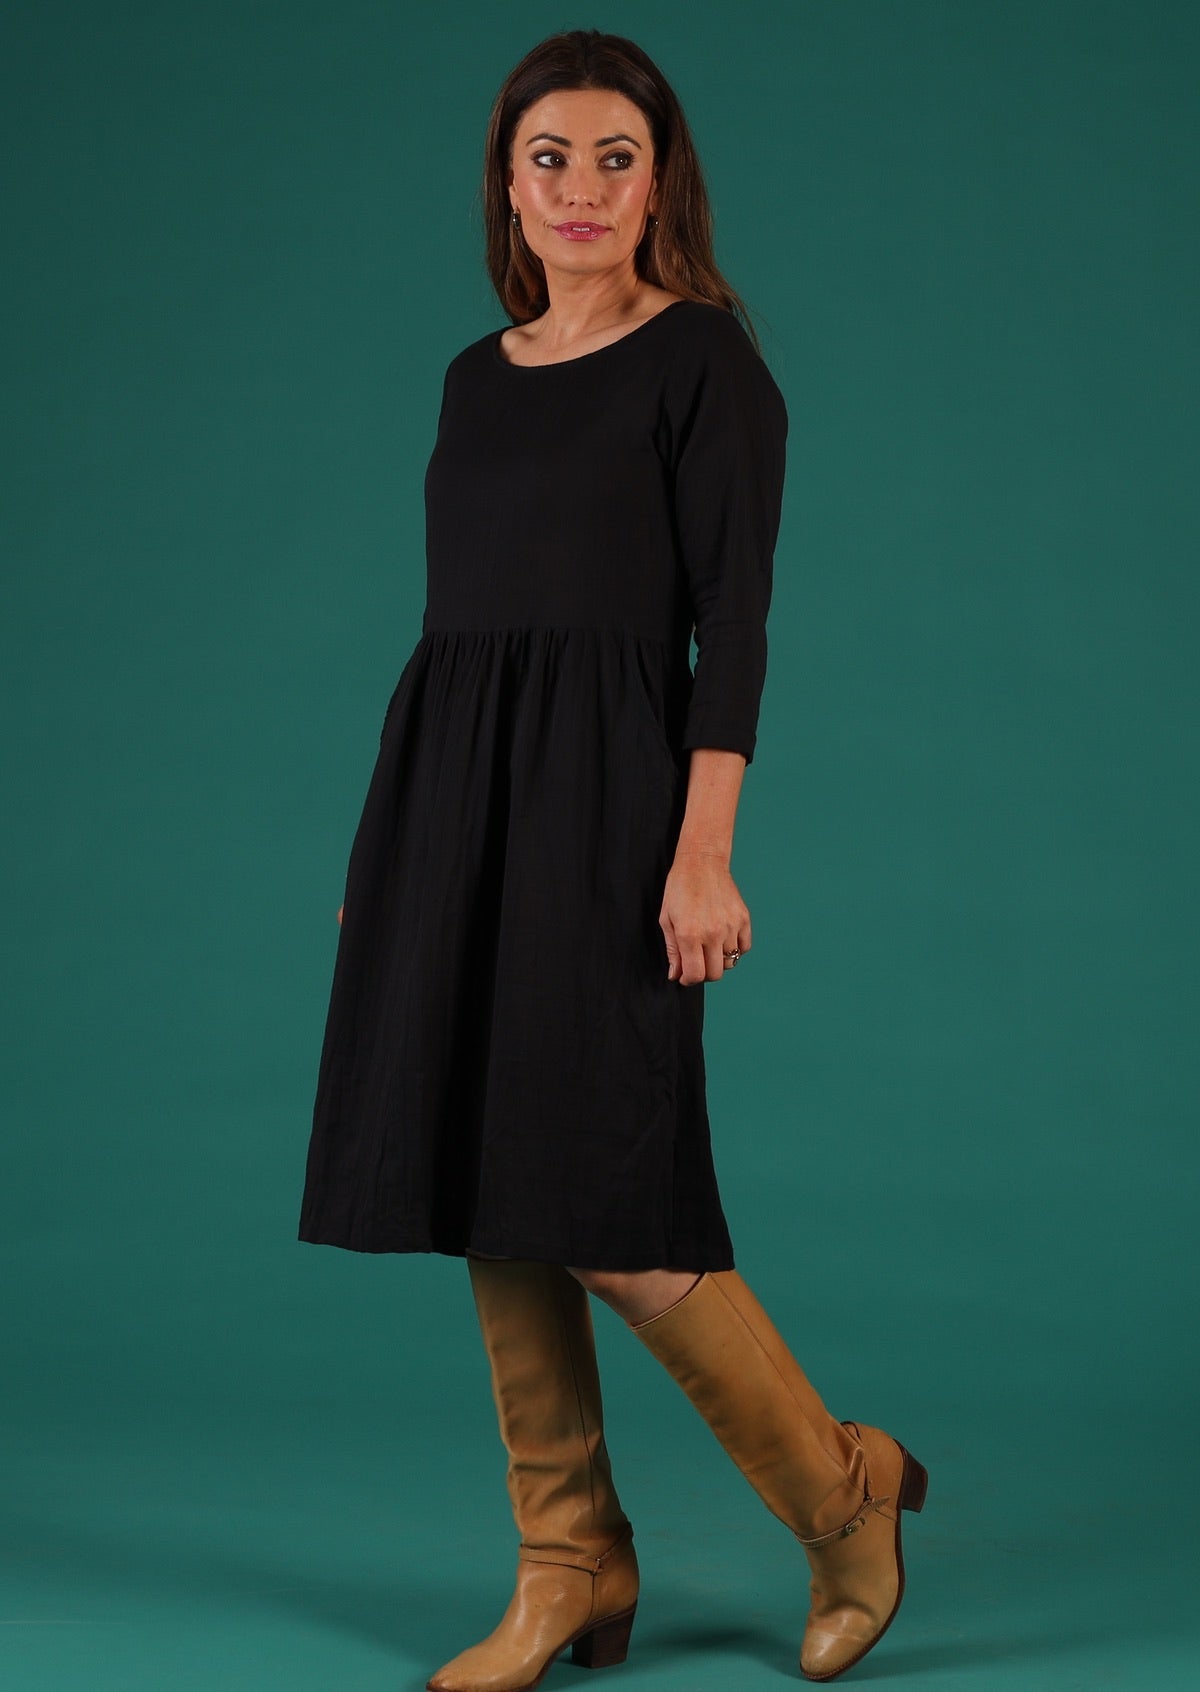 Women's 100% cotton black dress Australia